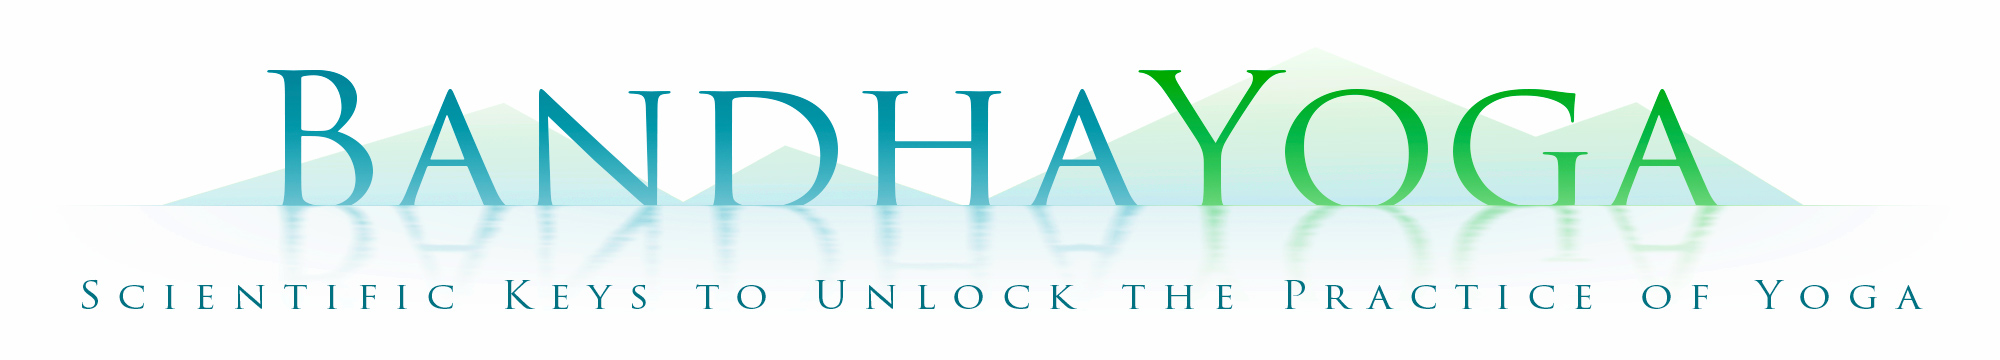 BandhaYoga Scientific Keys to Unlock the Practice of Hatha Yoga